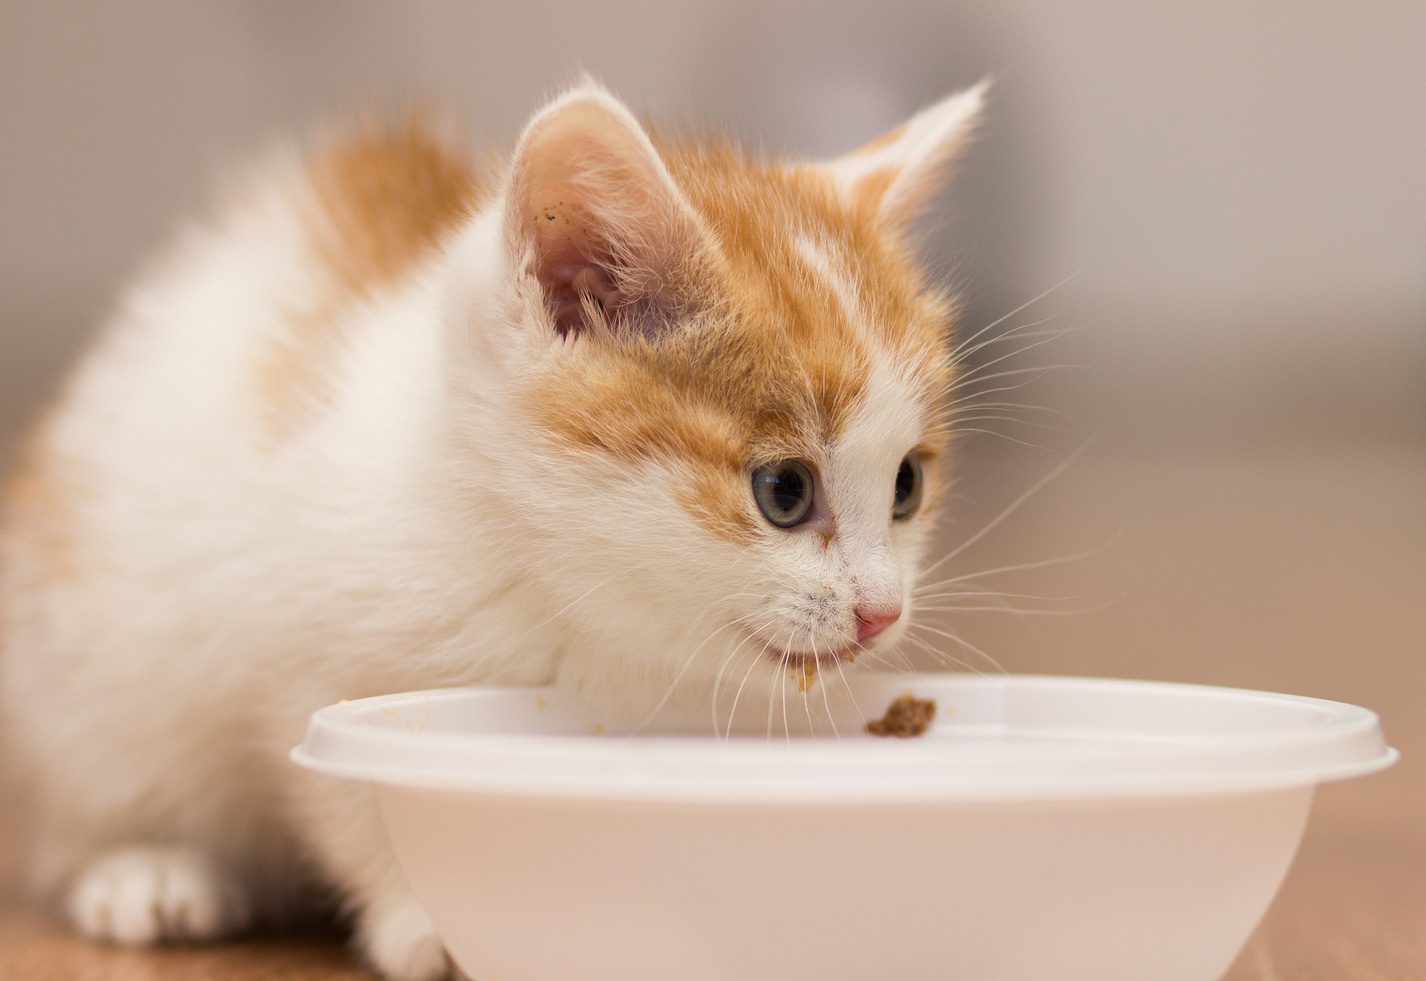 Pet food from kitten to senior cat